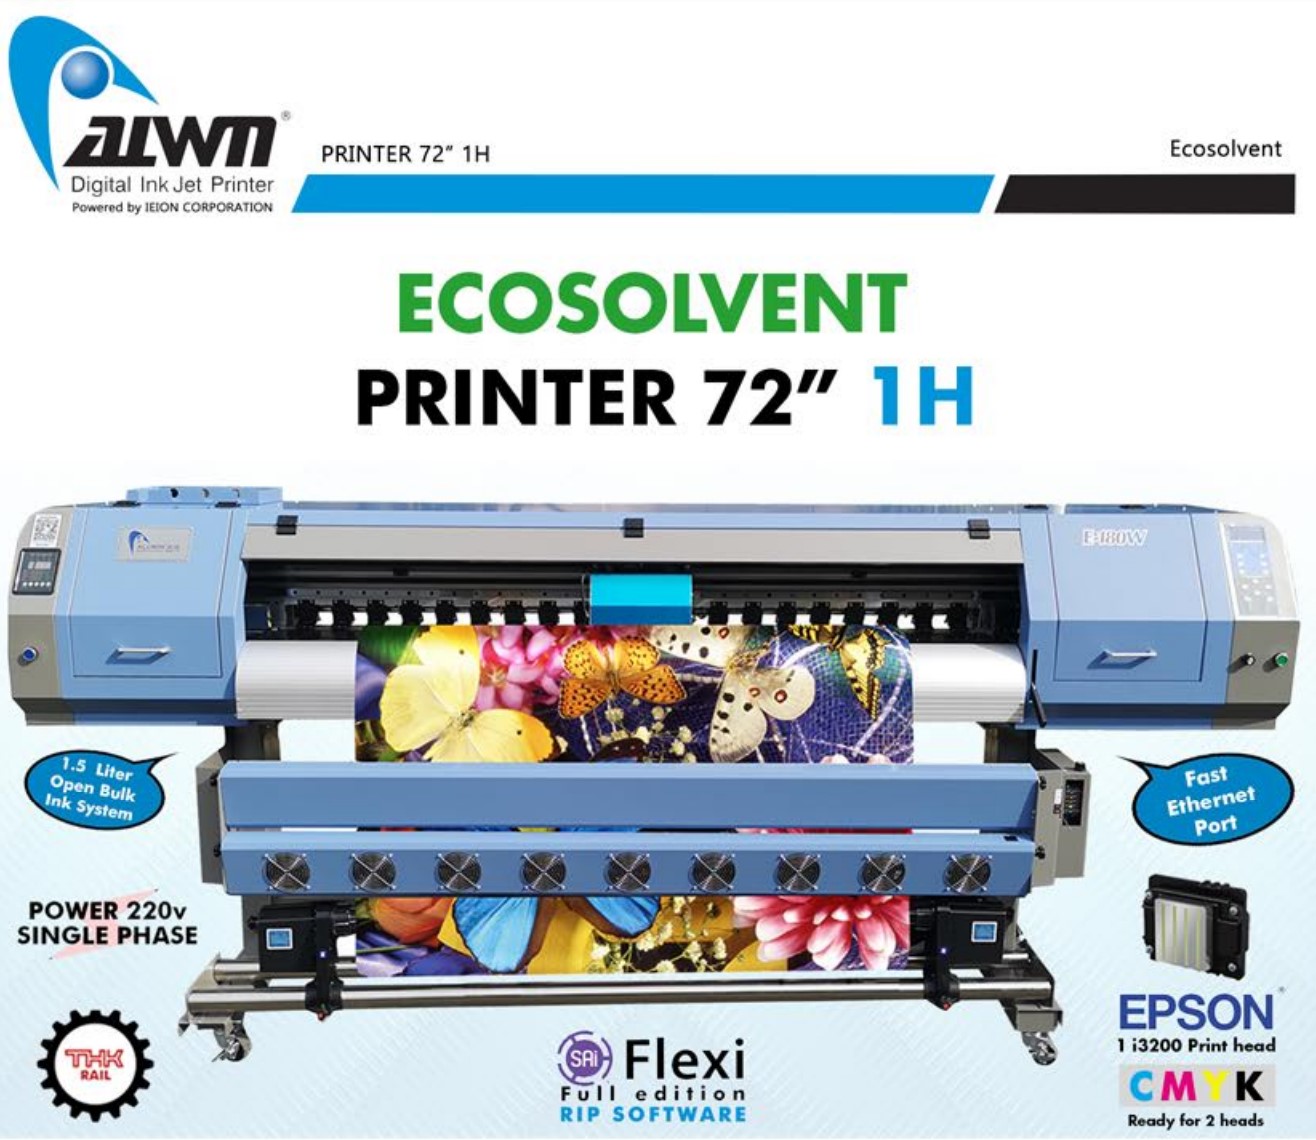 Allwin Ecosolvent Printer 72" 1H